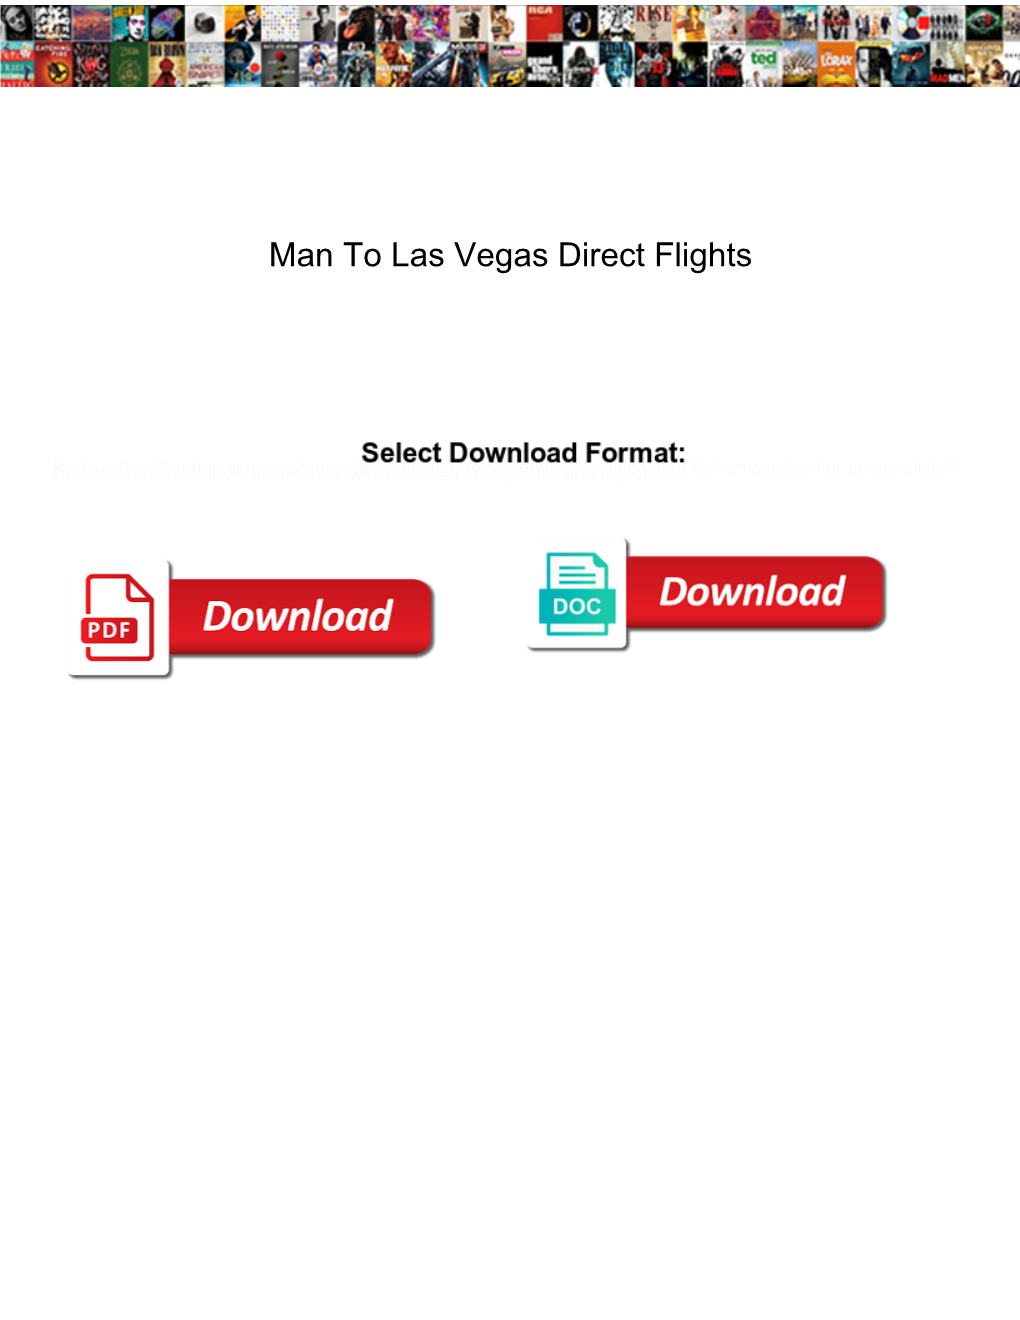 Man to Las Vegas Direct Flights